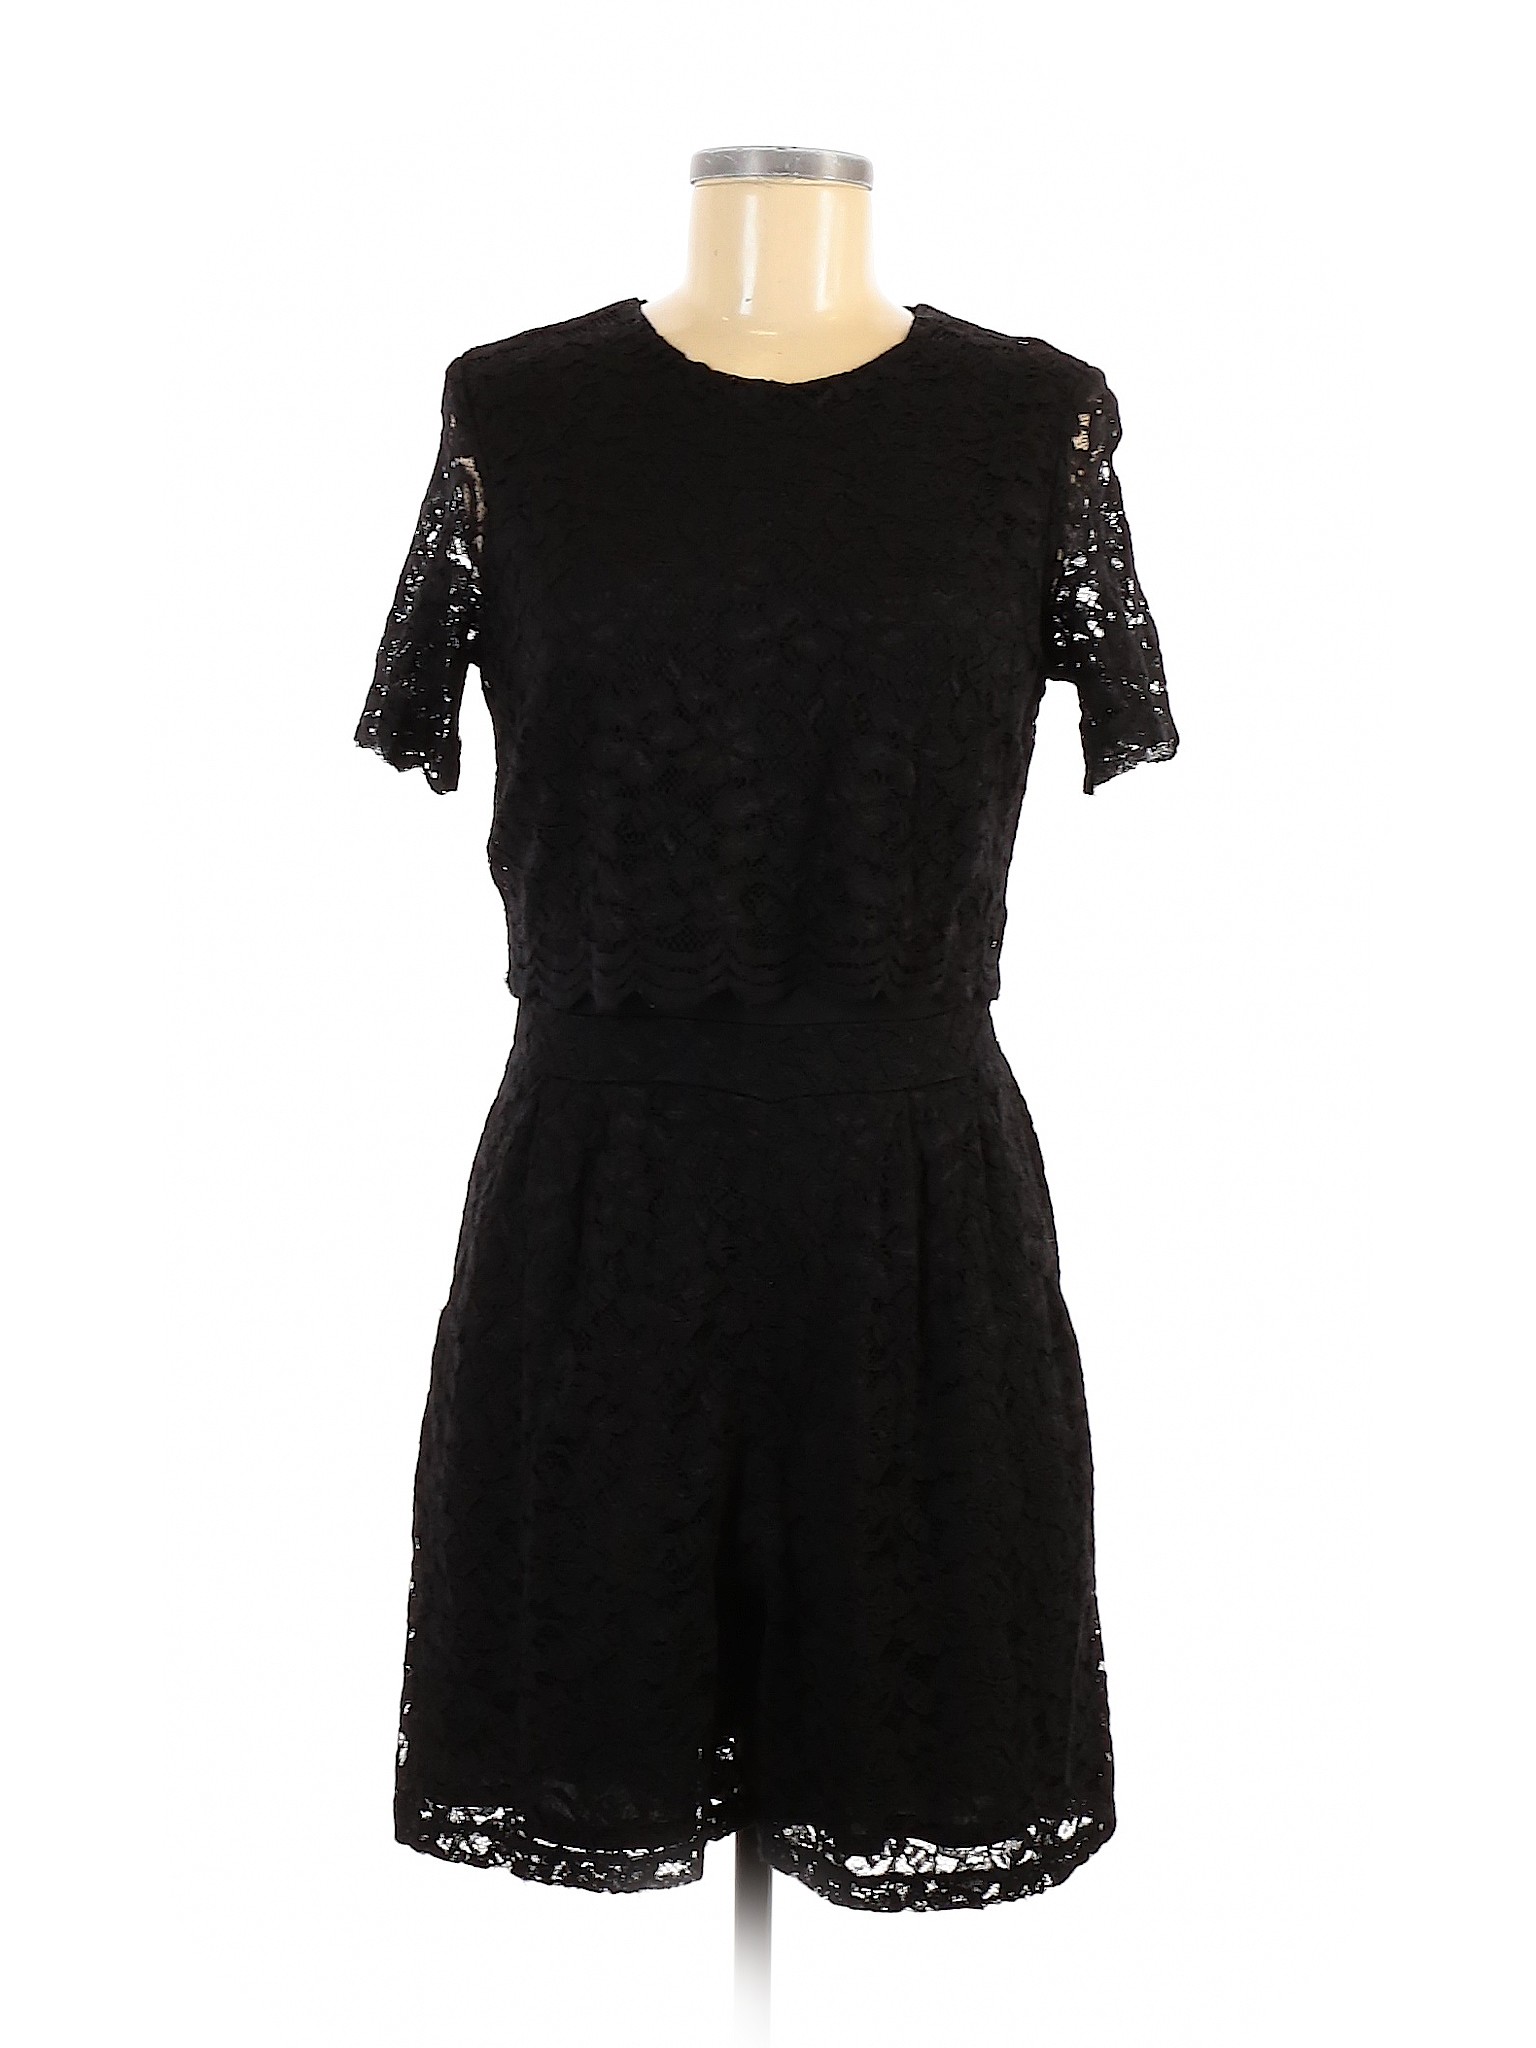 Taylor Women Black Cocktail Dress 8 | eBay